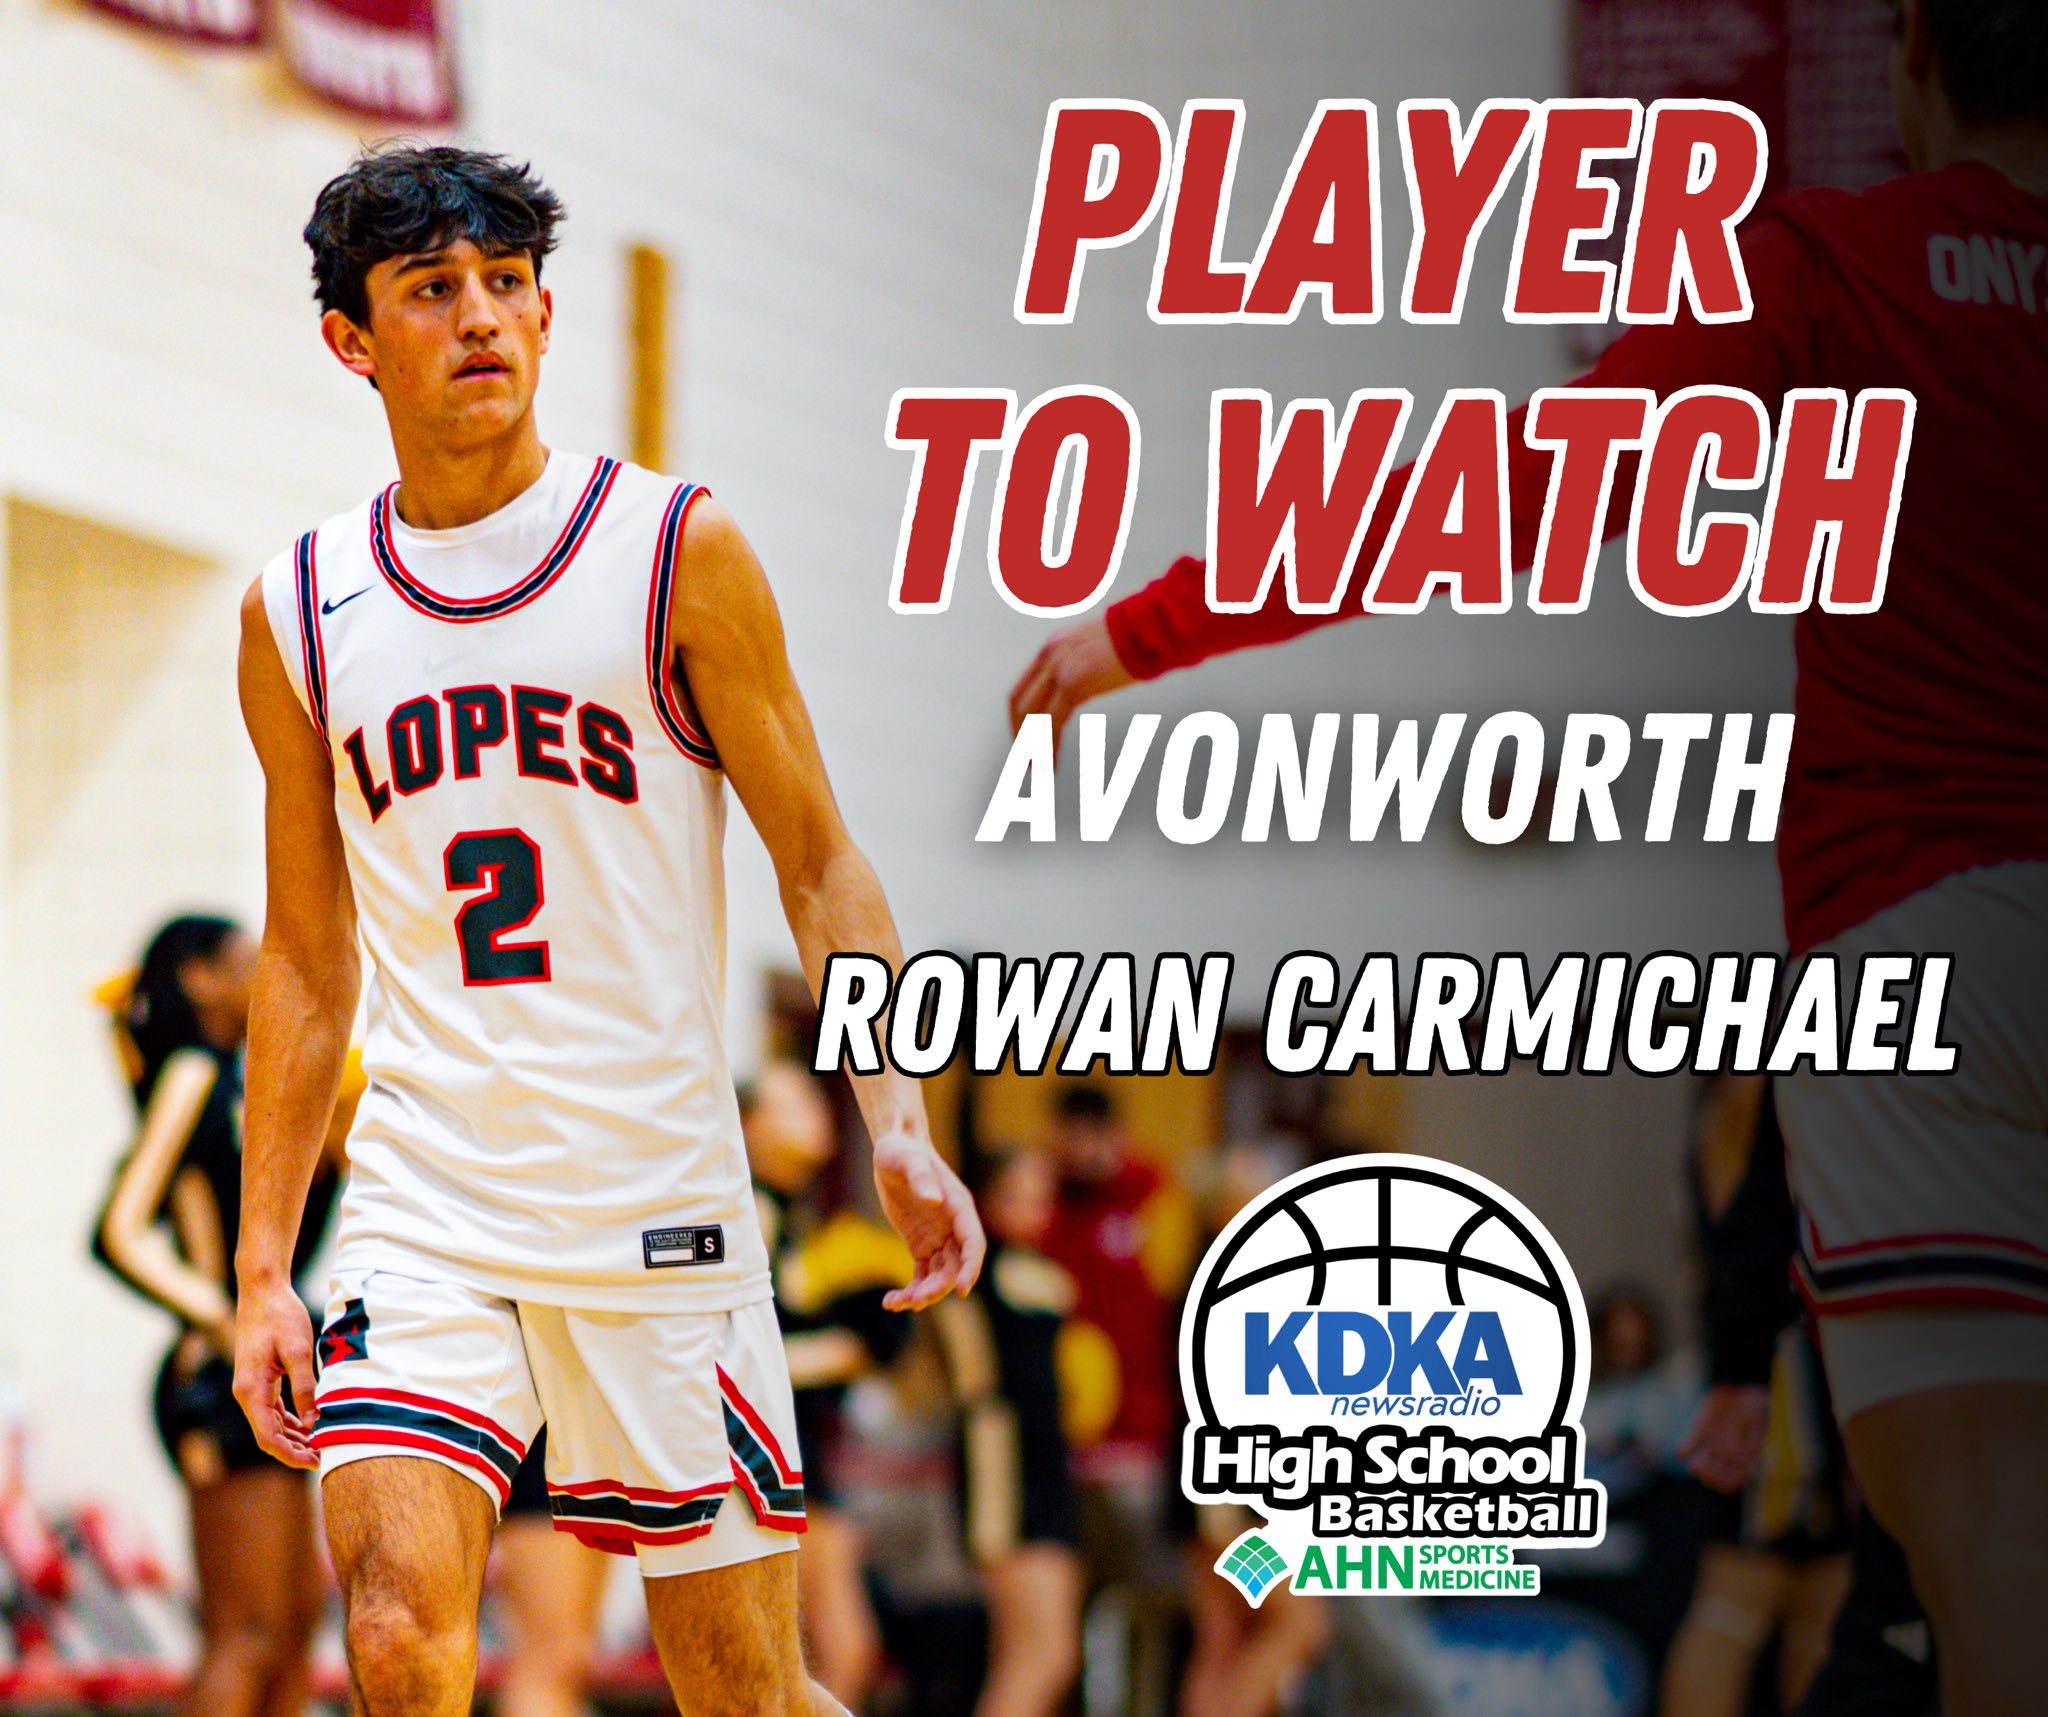 100.1 FM and AM 1020 KDKA on X: " Avonworth G Rowan Carmichael (@CarmichaeRowan) - star guard averaging 20 points per game for the Lopes Highlights ➡: https://t.co/dyuJRBFRU4 #KDKAHoops #